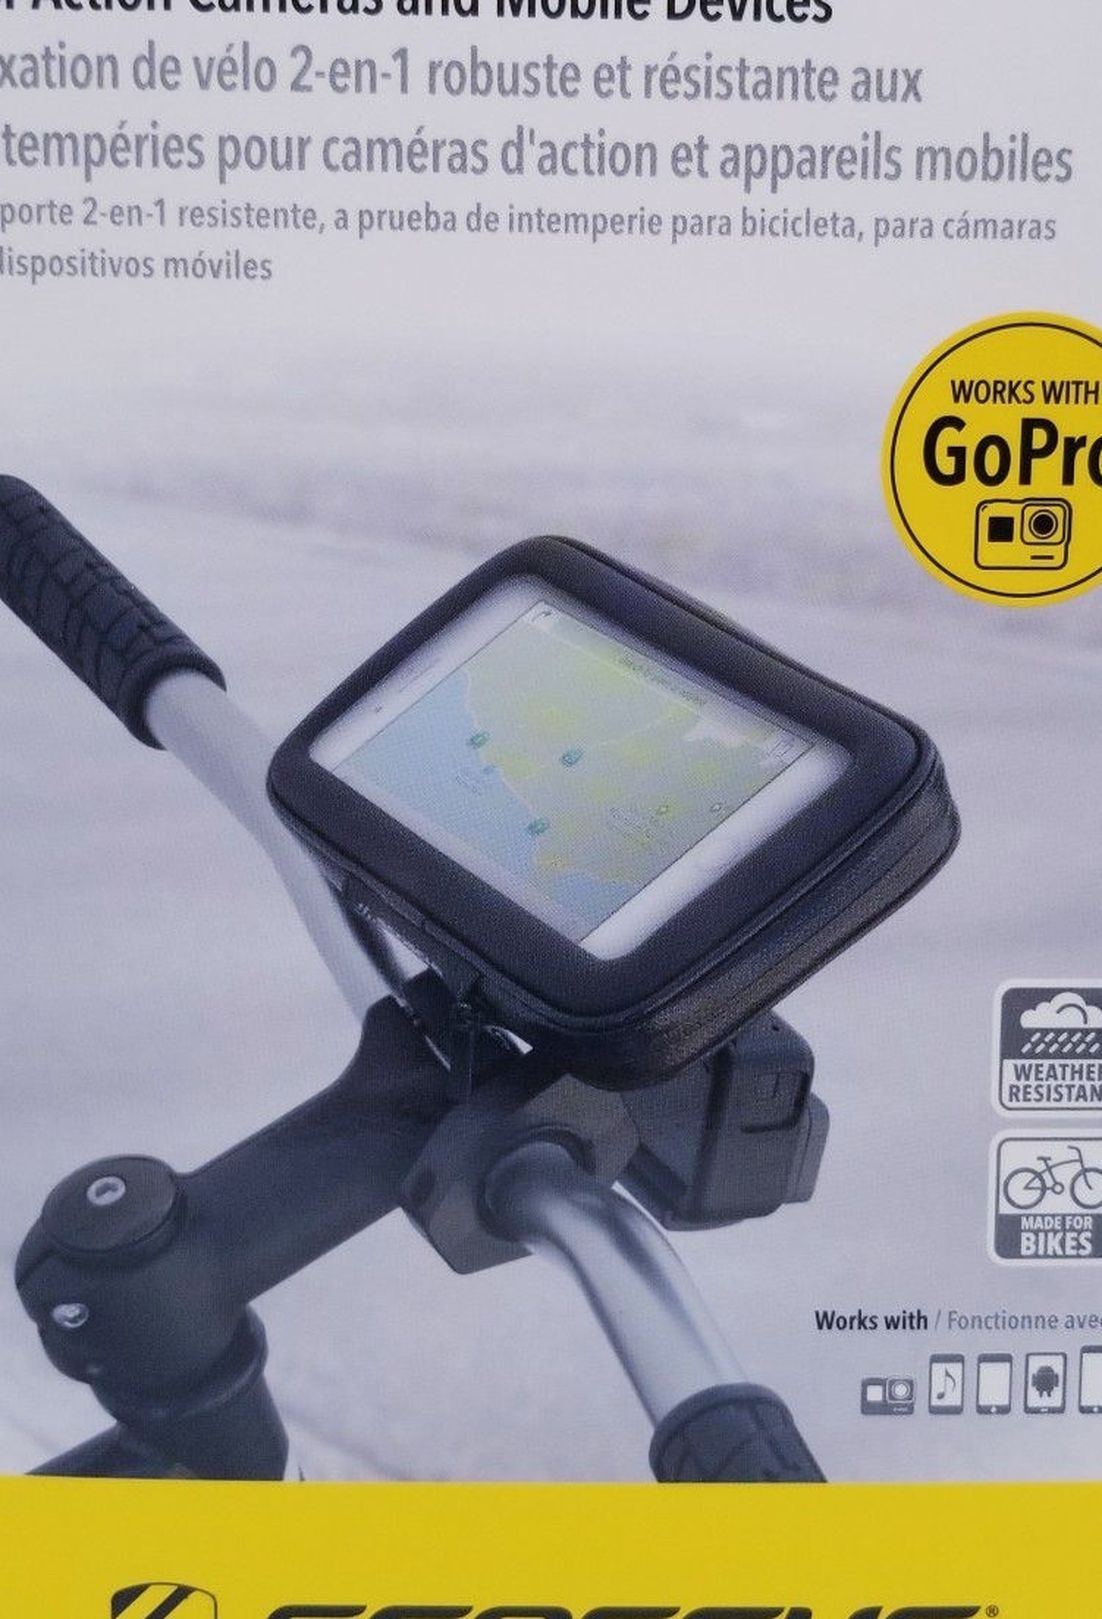 Scosche Handleit Pro! Smartphone and Gopro Bicycle Mount